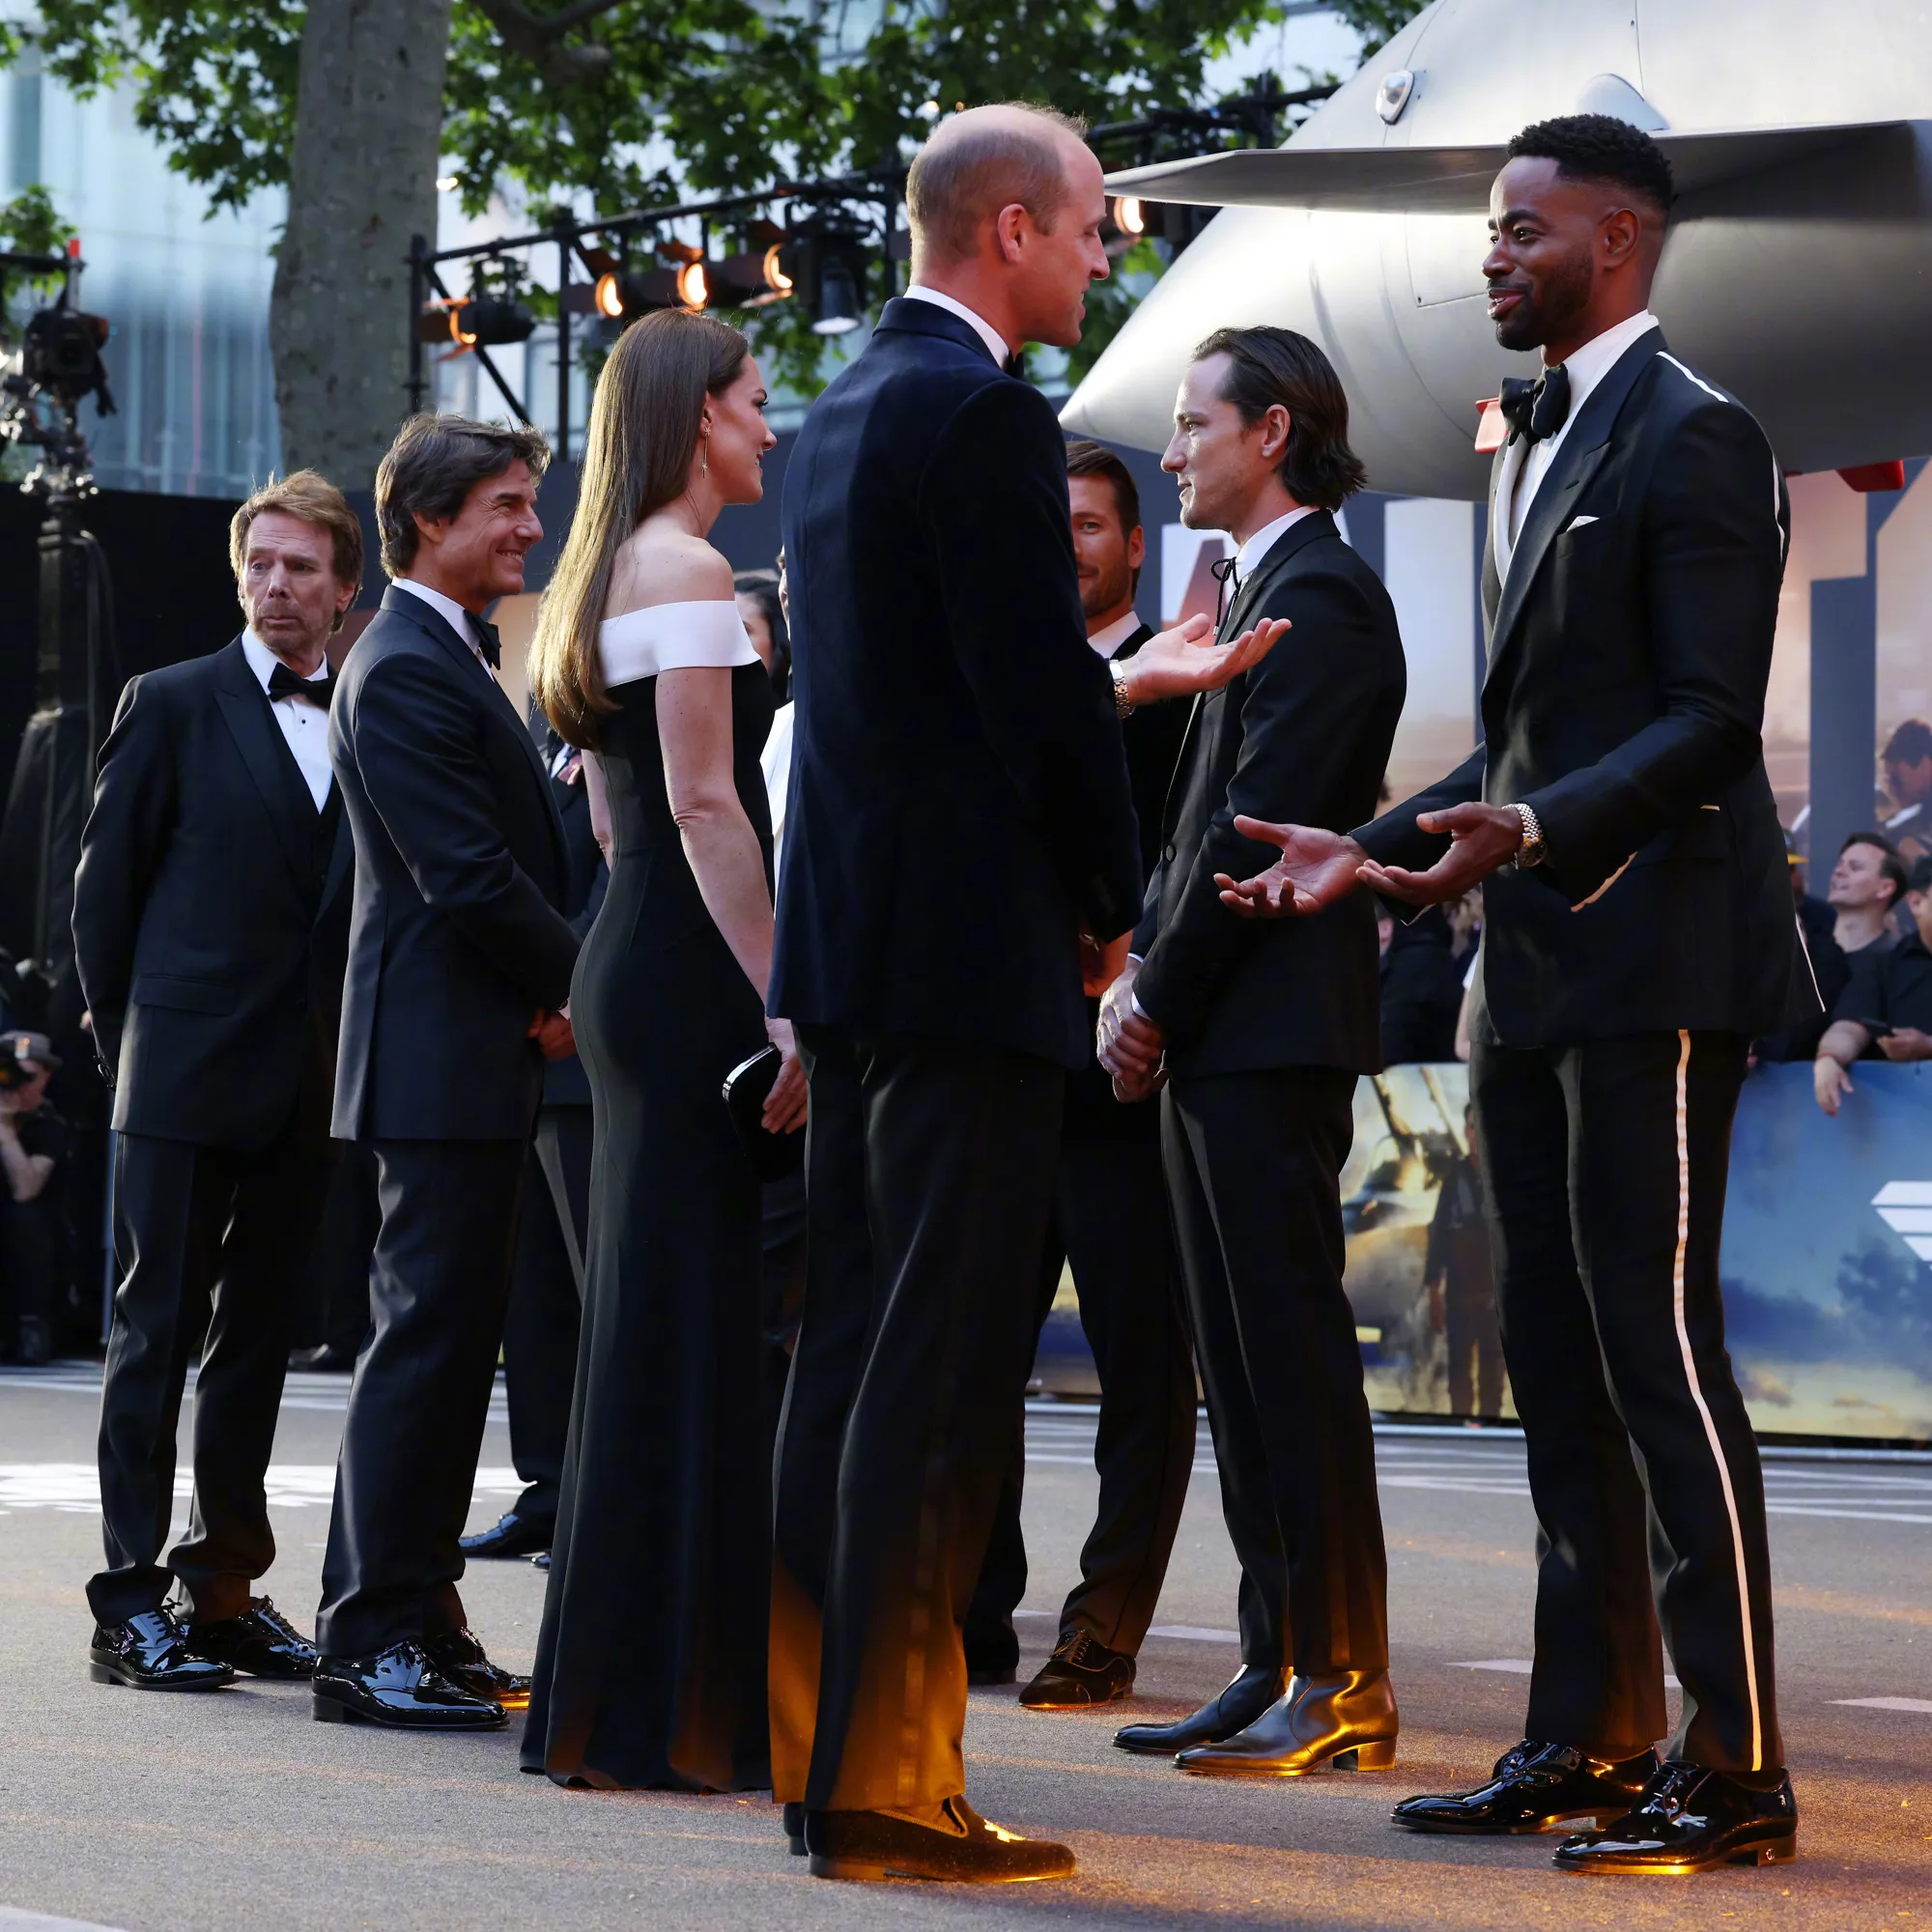 Top Gun: Maverick London premiere, William and Kate meet Tom Cruise and crew